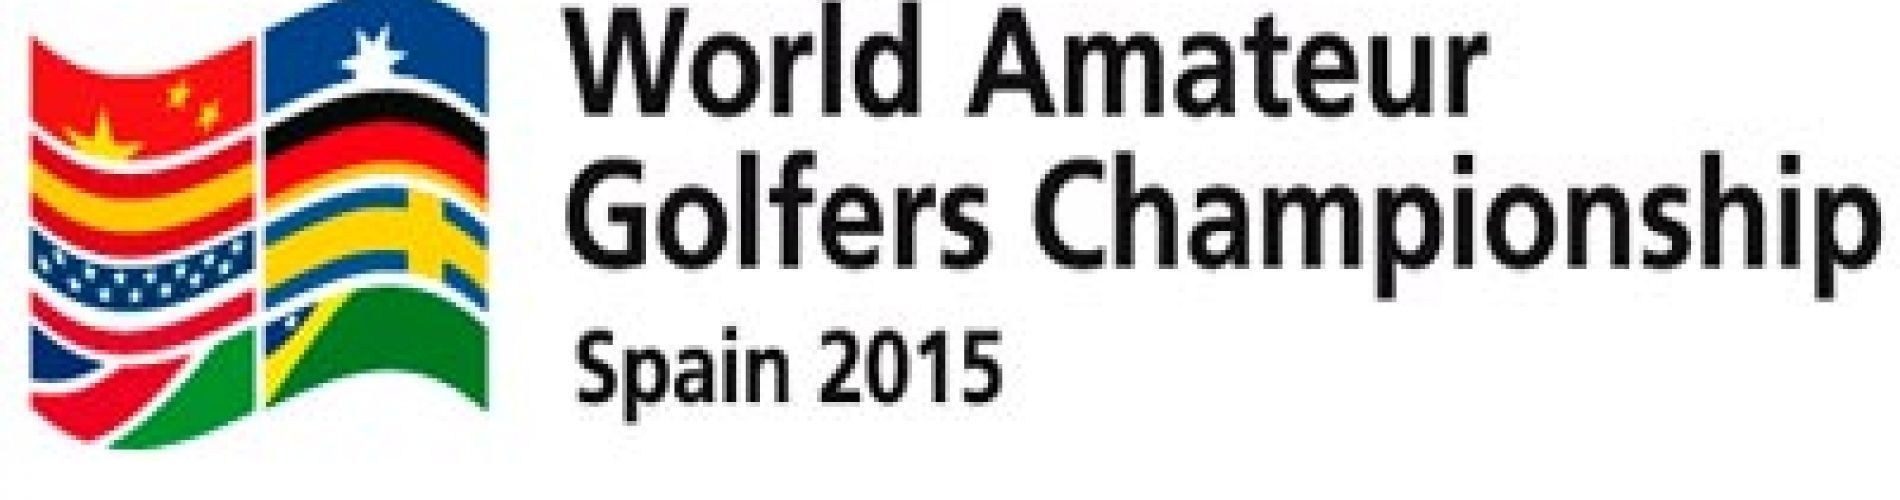 best of Golf chamionship amateur World